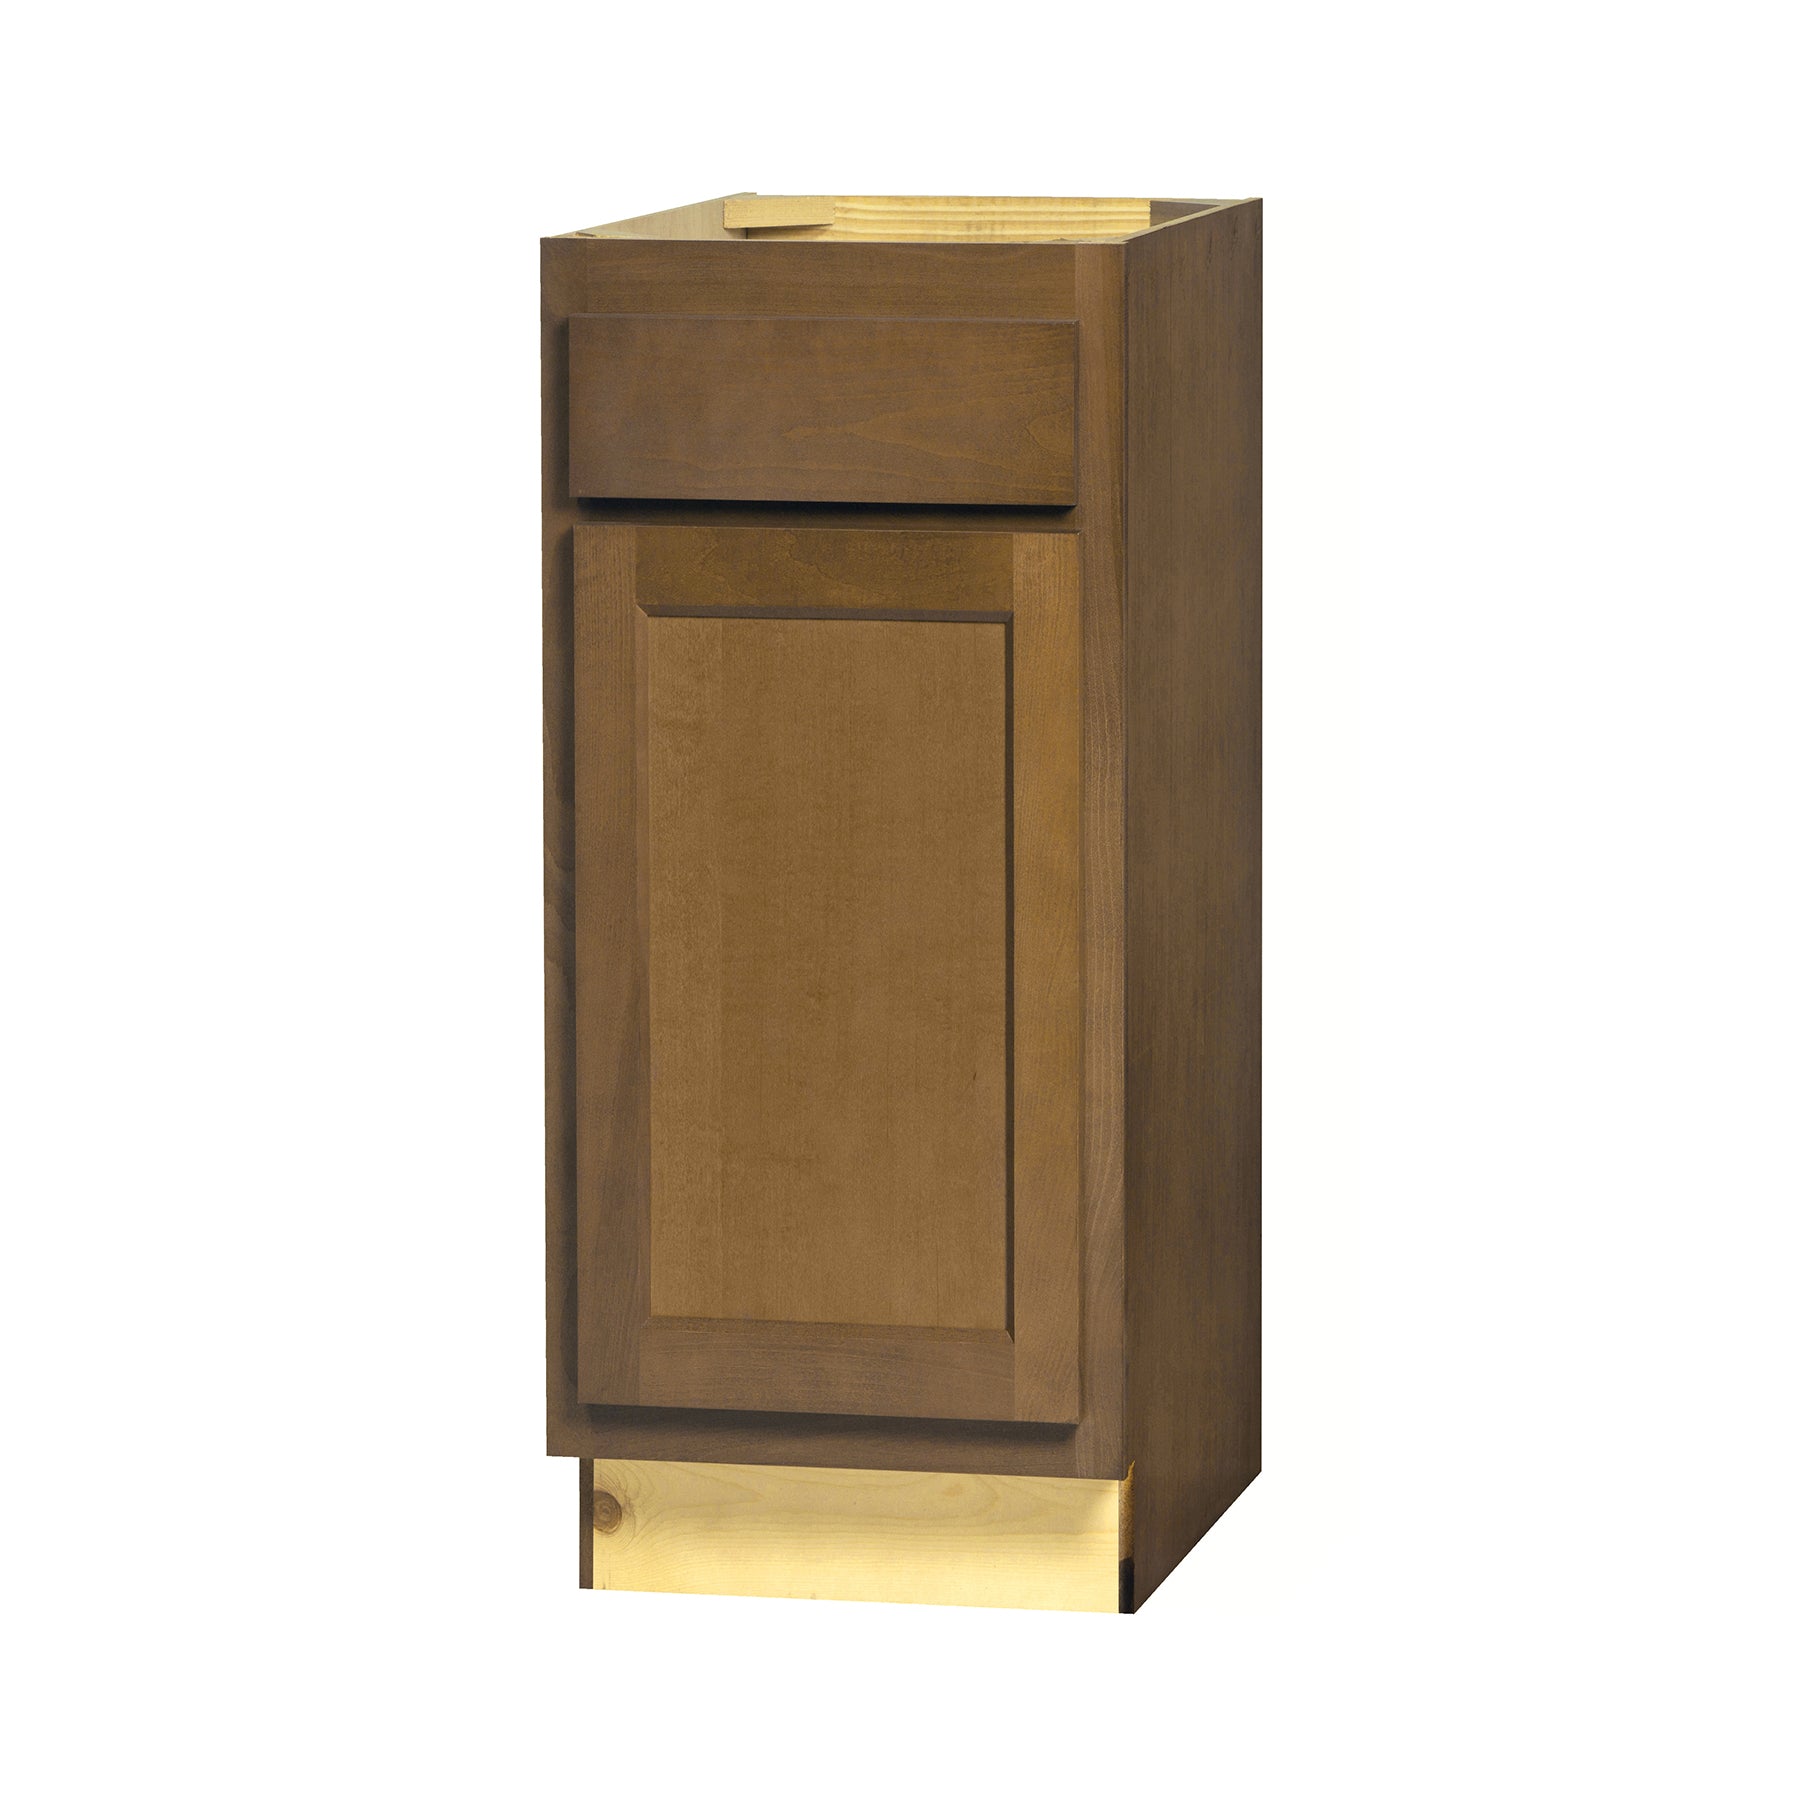 15 Inch Base Cabinets - Warmwood Shaker - 15 Inch W x 24 Inch D x 34.5 Inch H